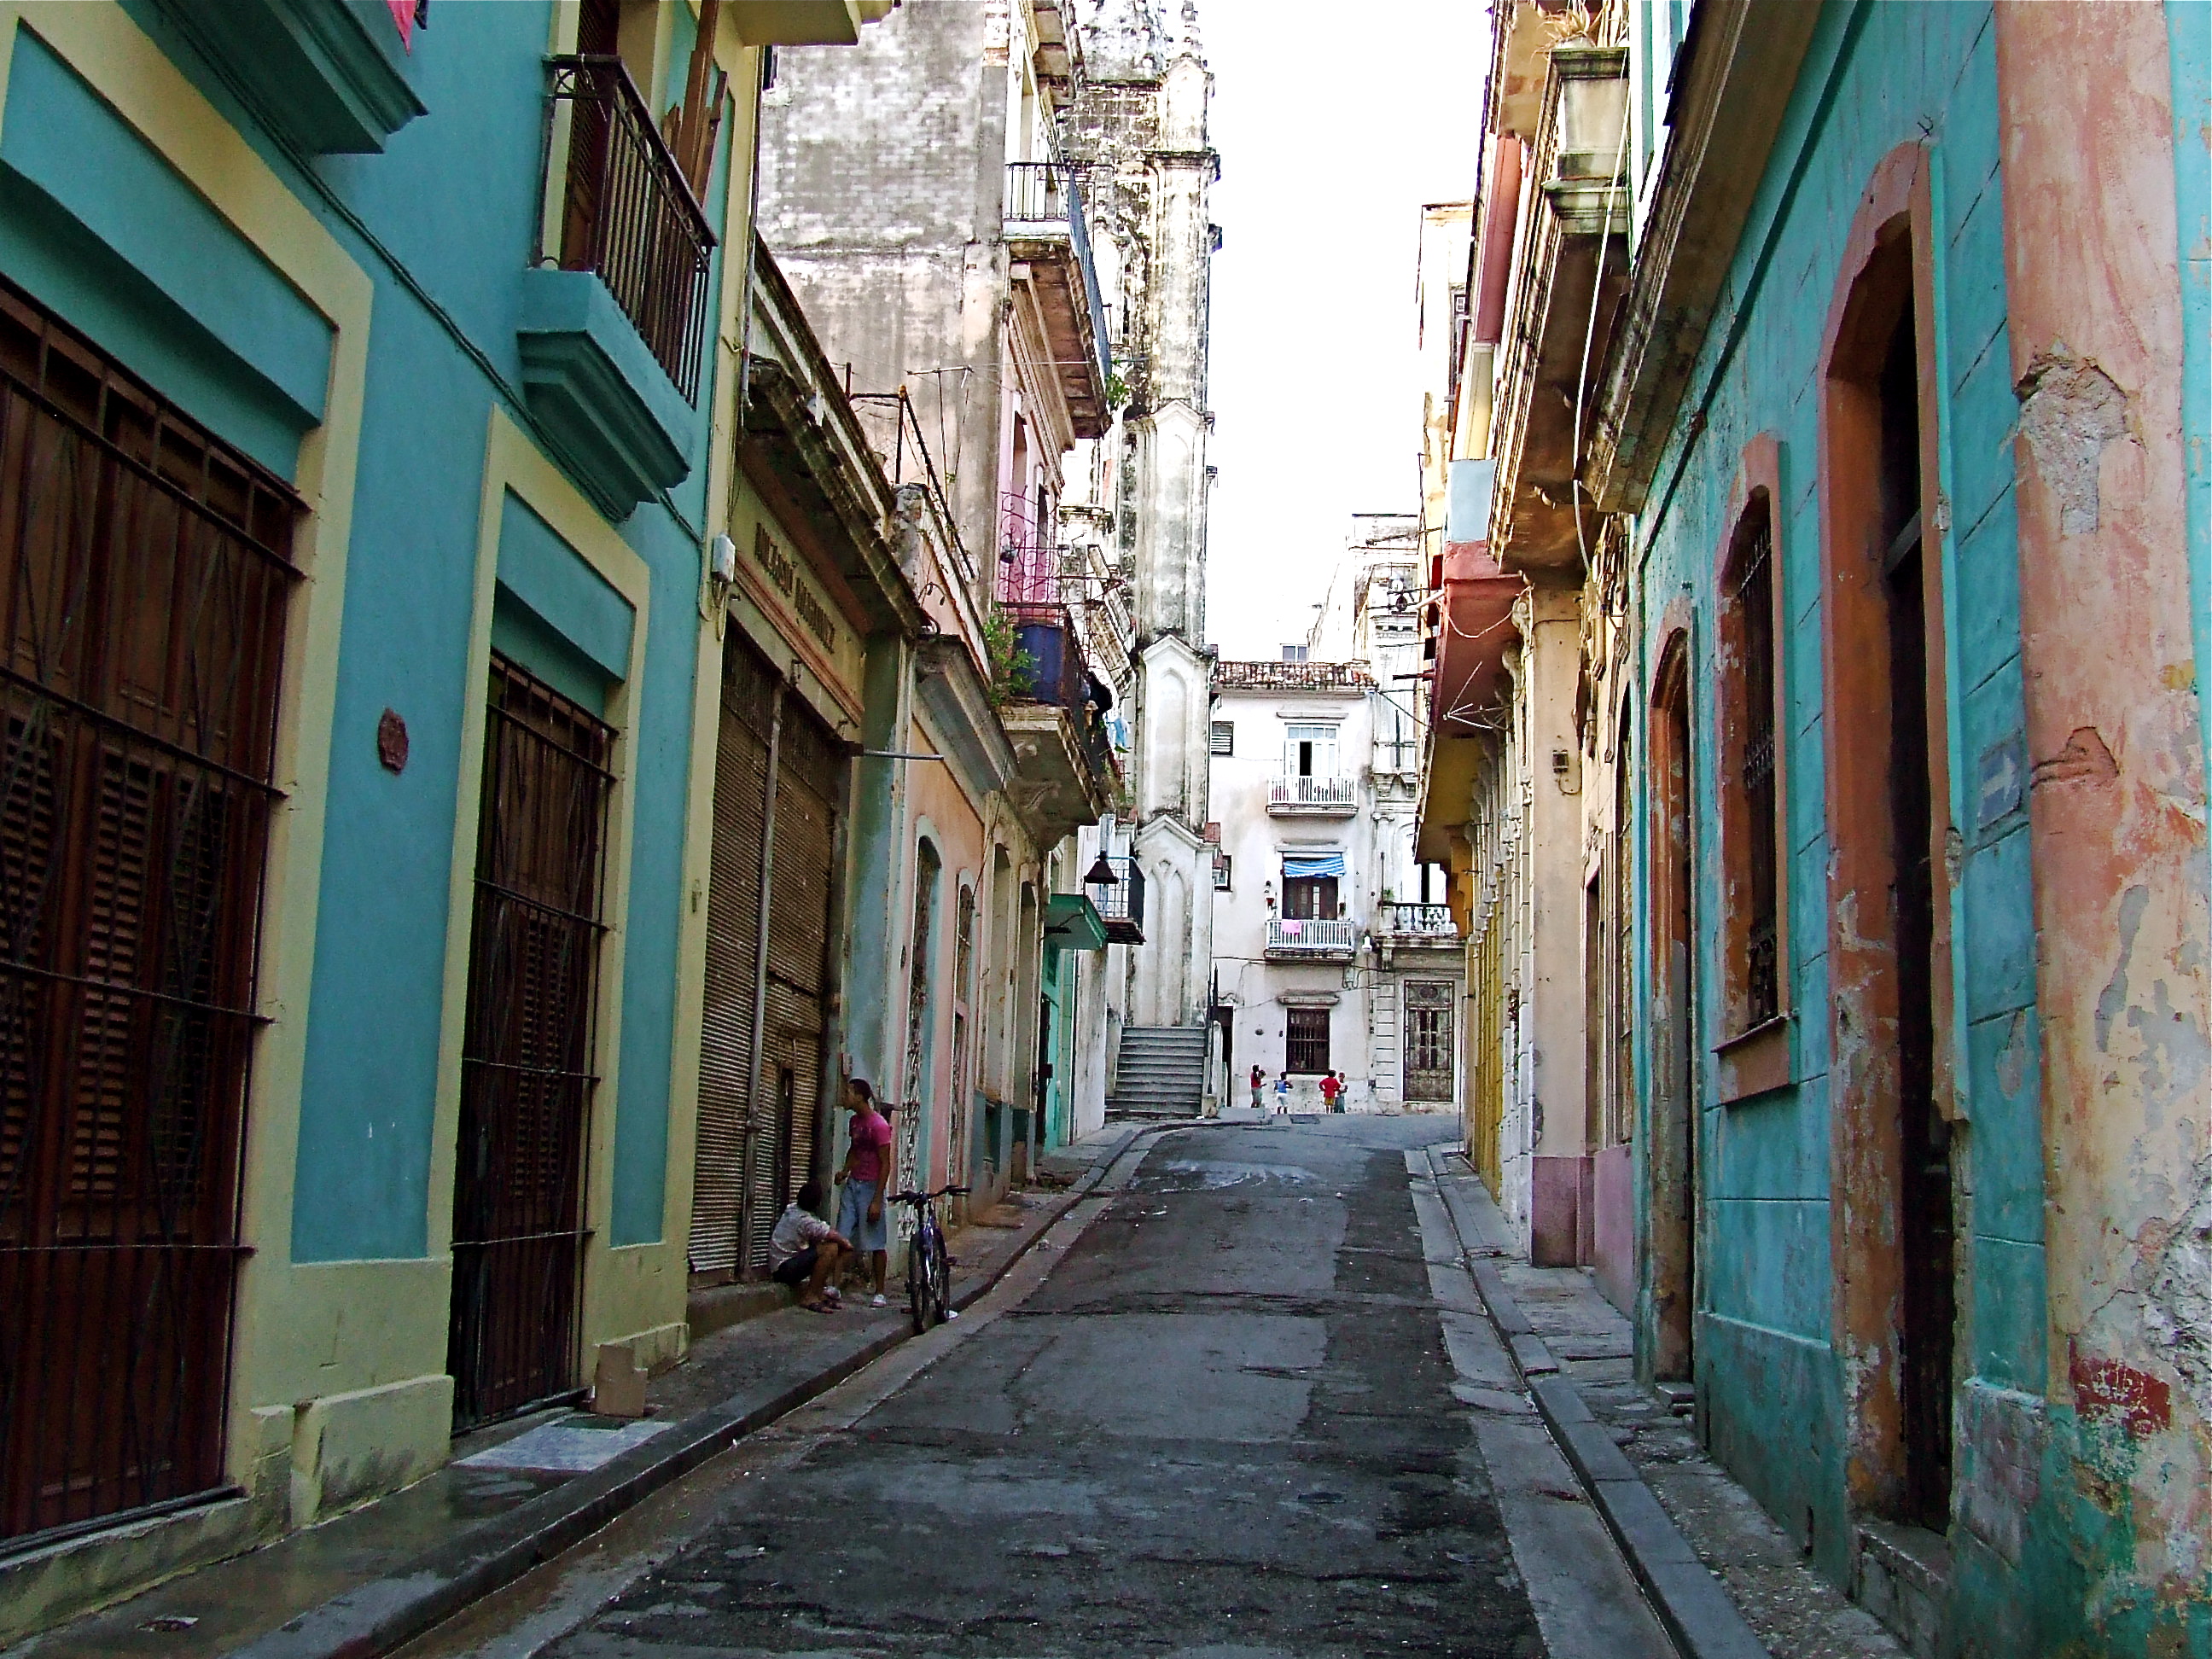 File:Old Havana back street.JPG - Wikimedia Commons